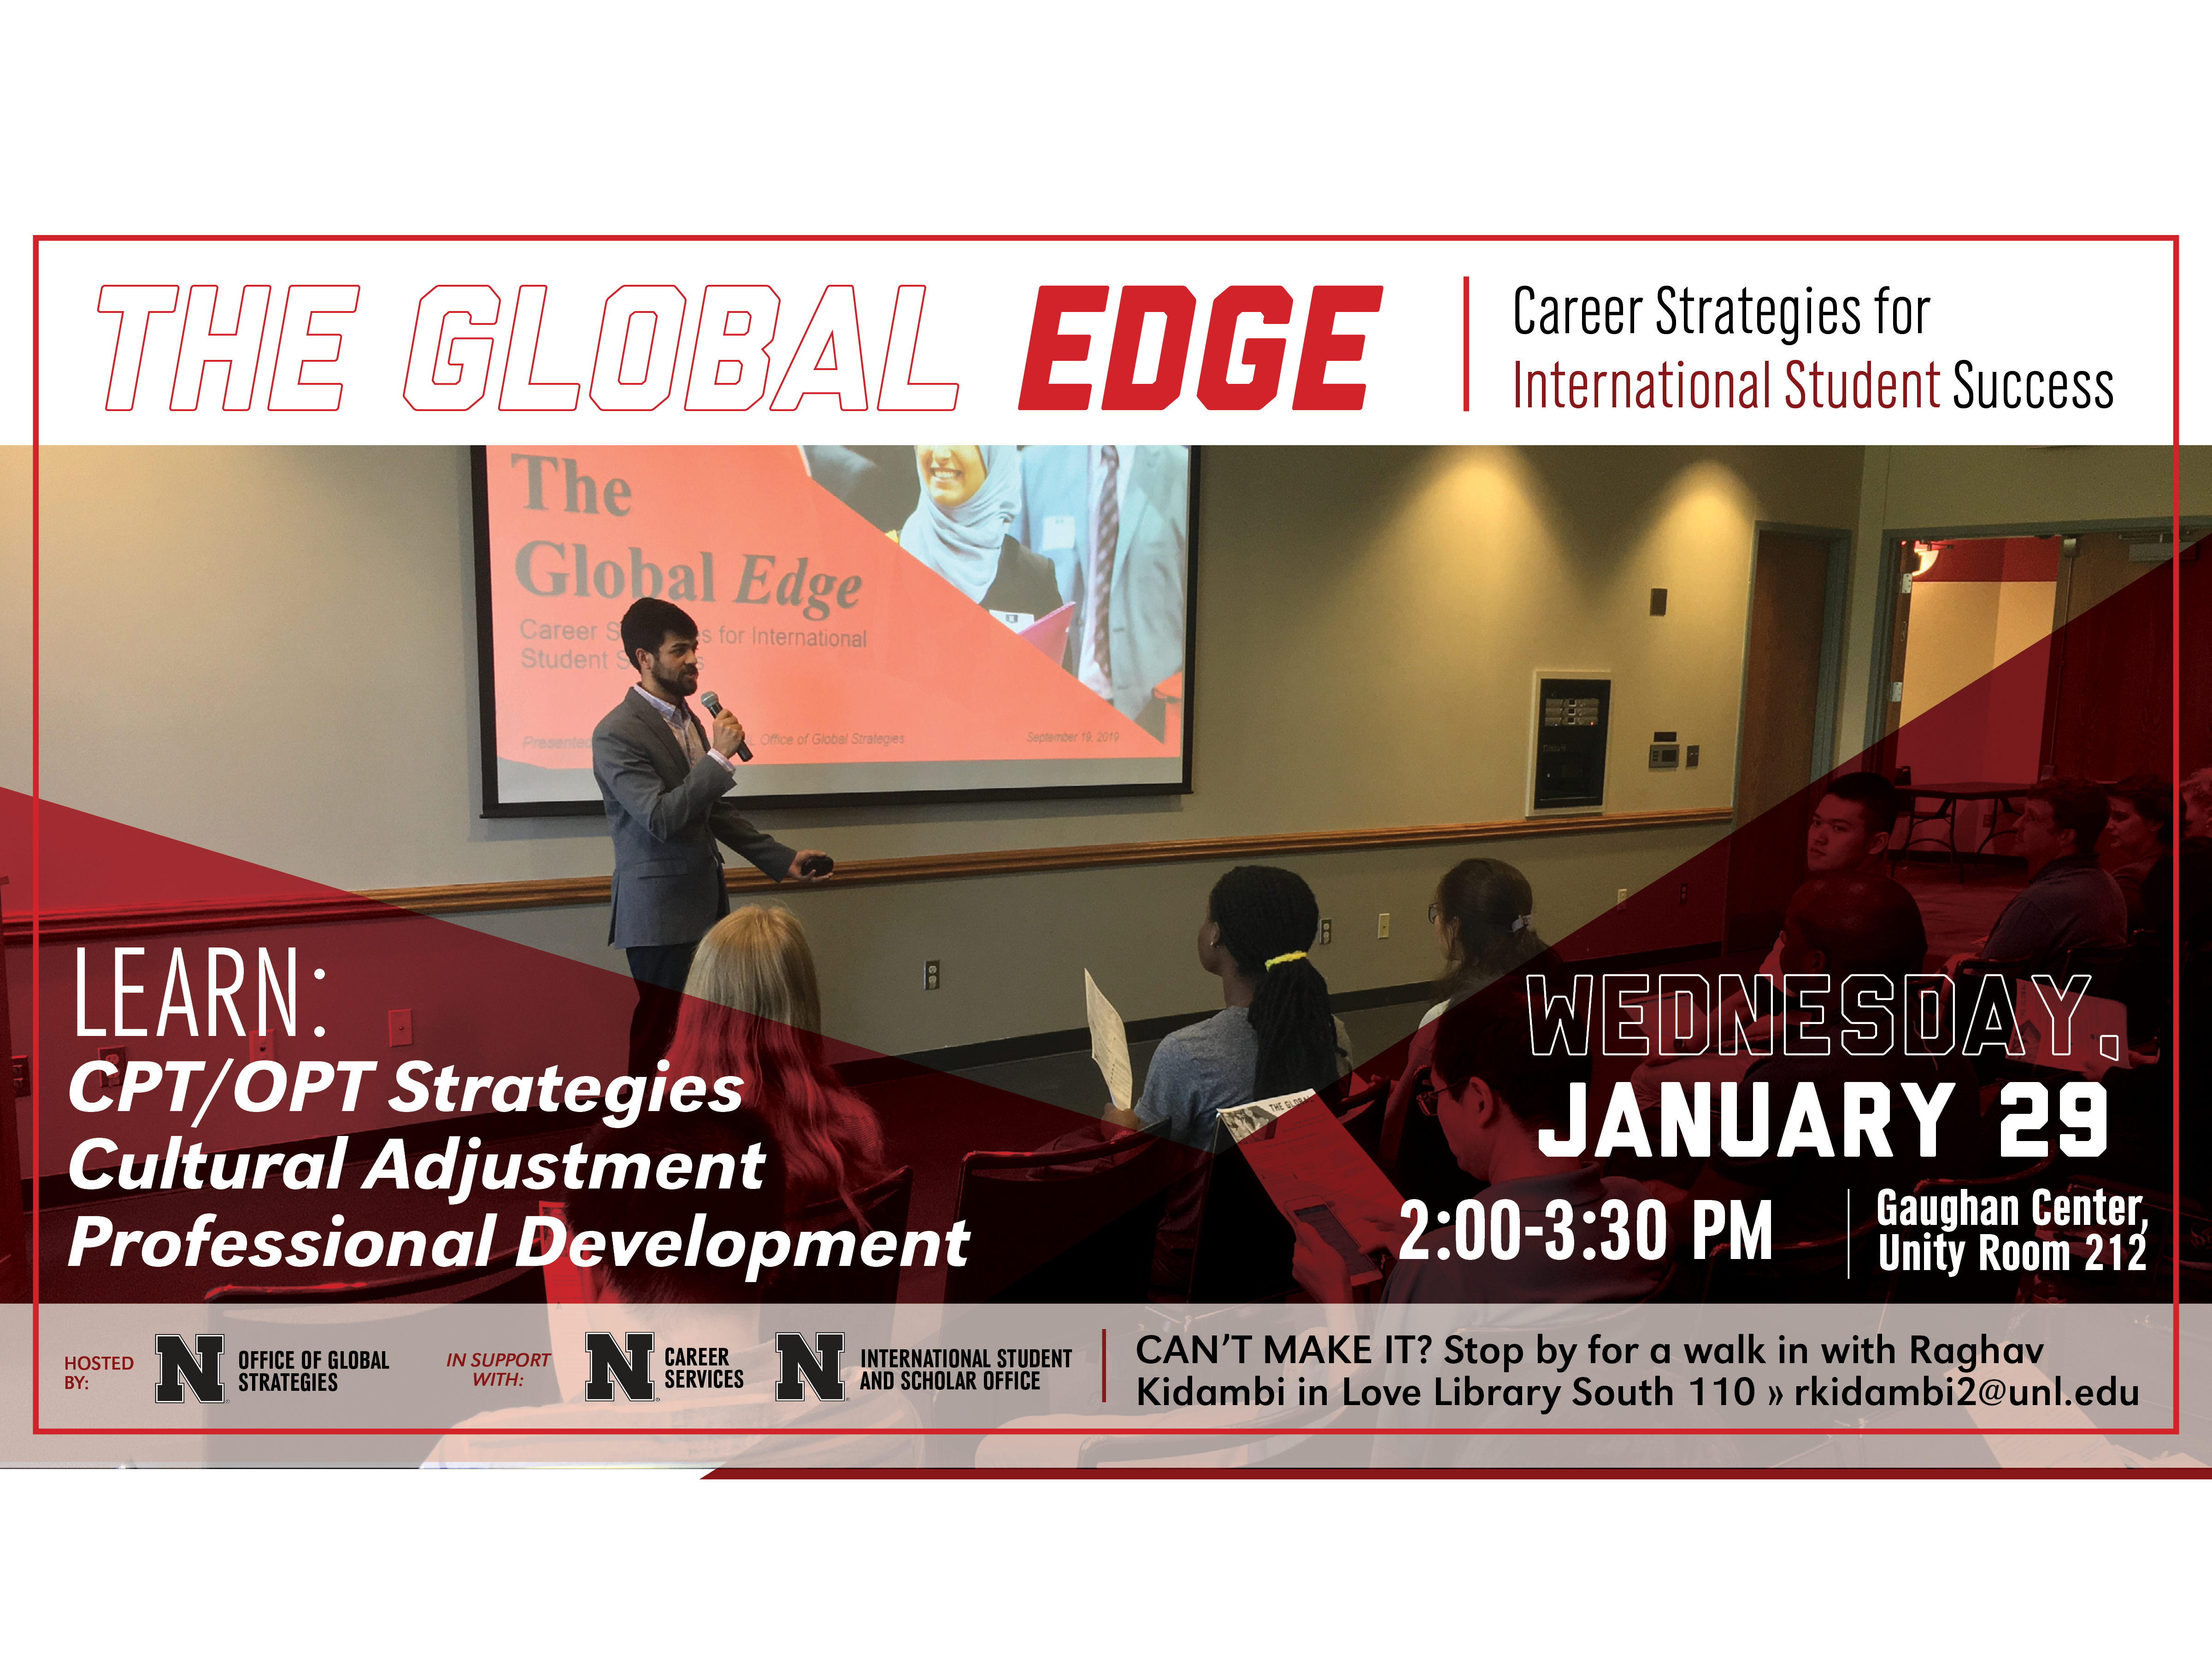 Attend Career Strategies for International Student Success on Jan. 29